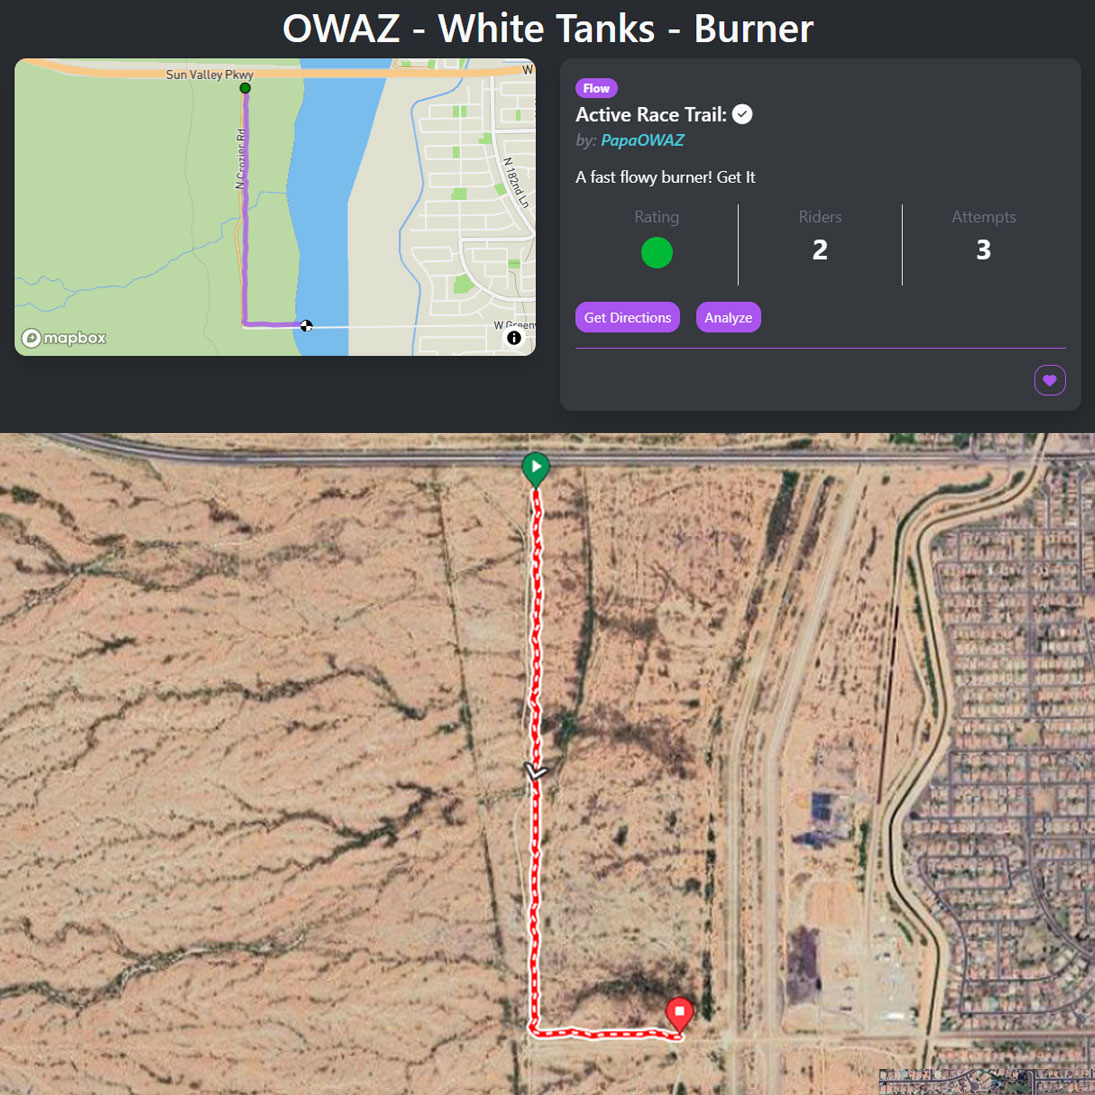 White Tanks Burner Map Owaz Underground Circuit